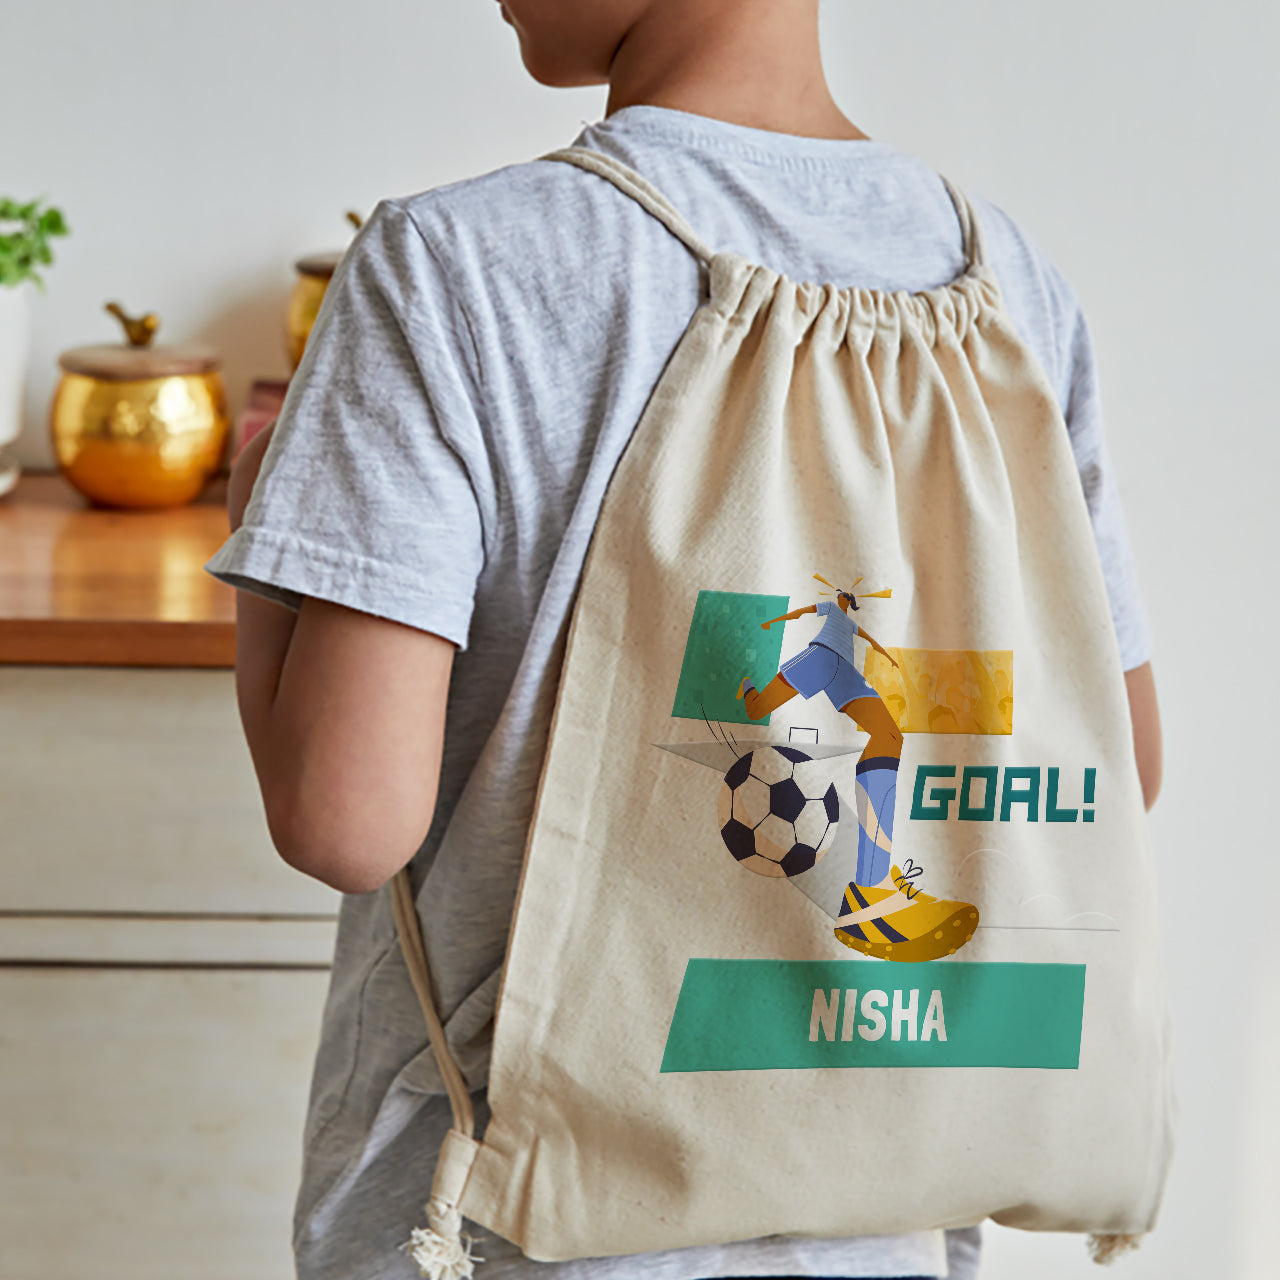 Personalised Drawstring Bag - Football Goals, Girl